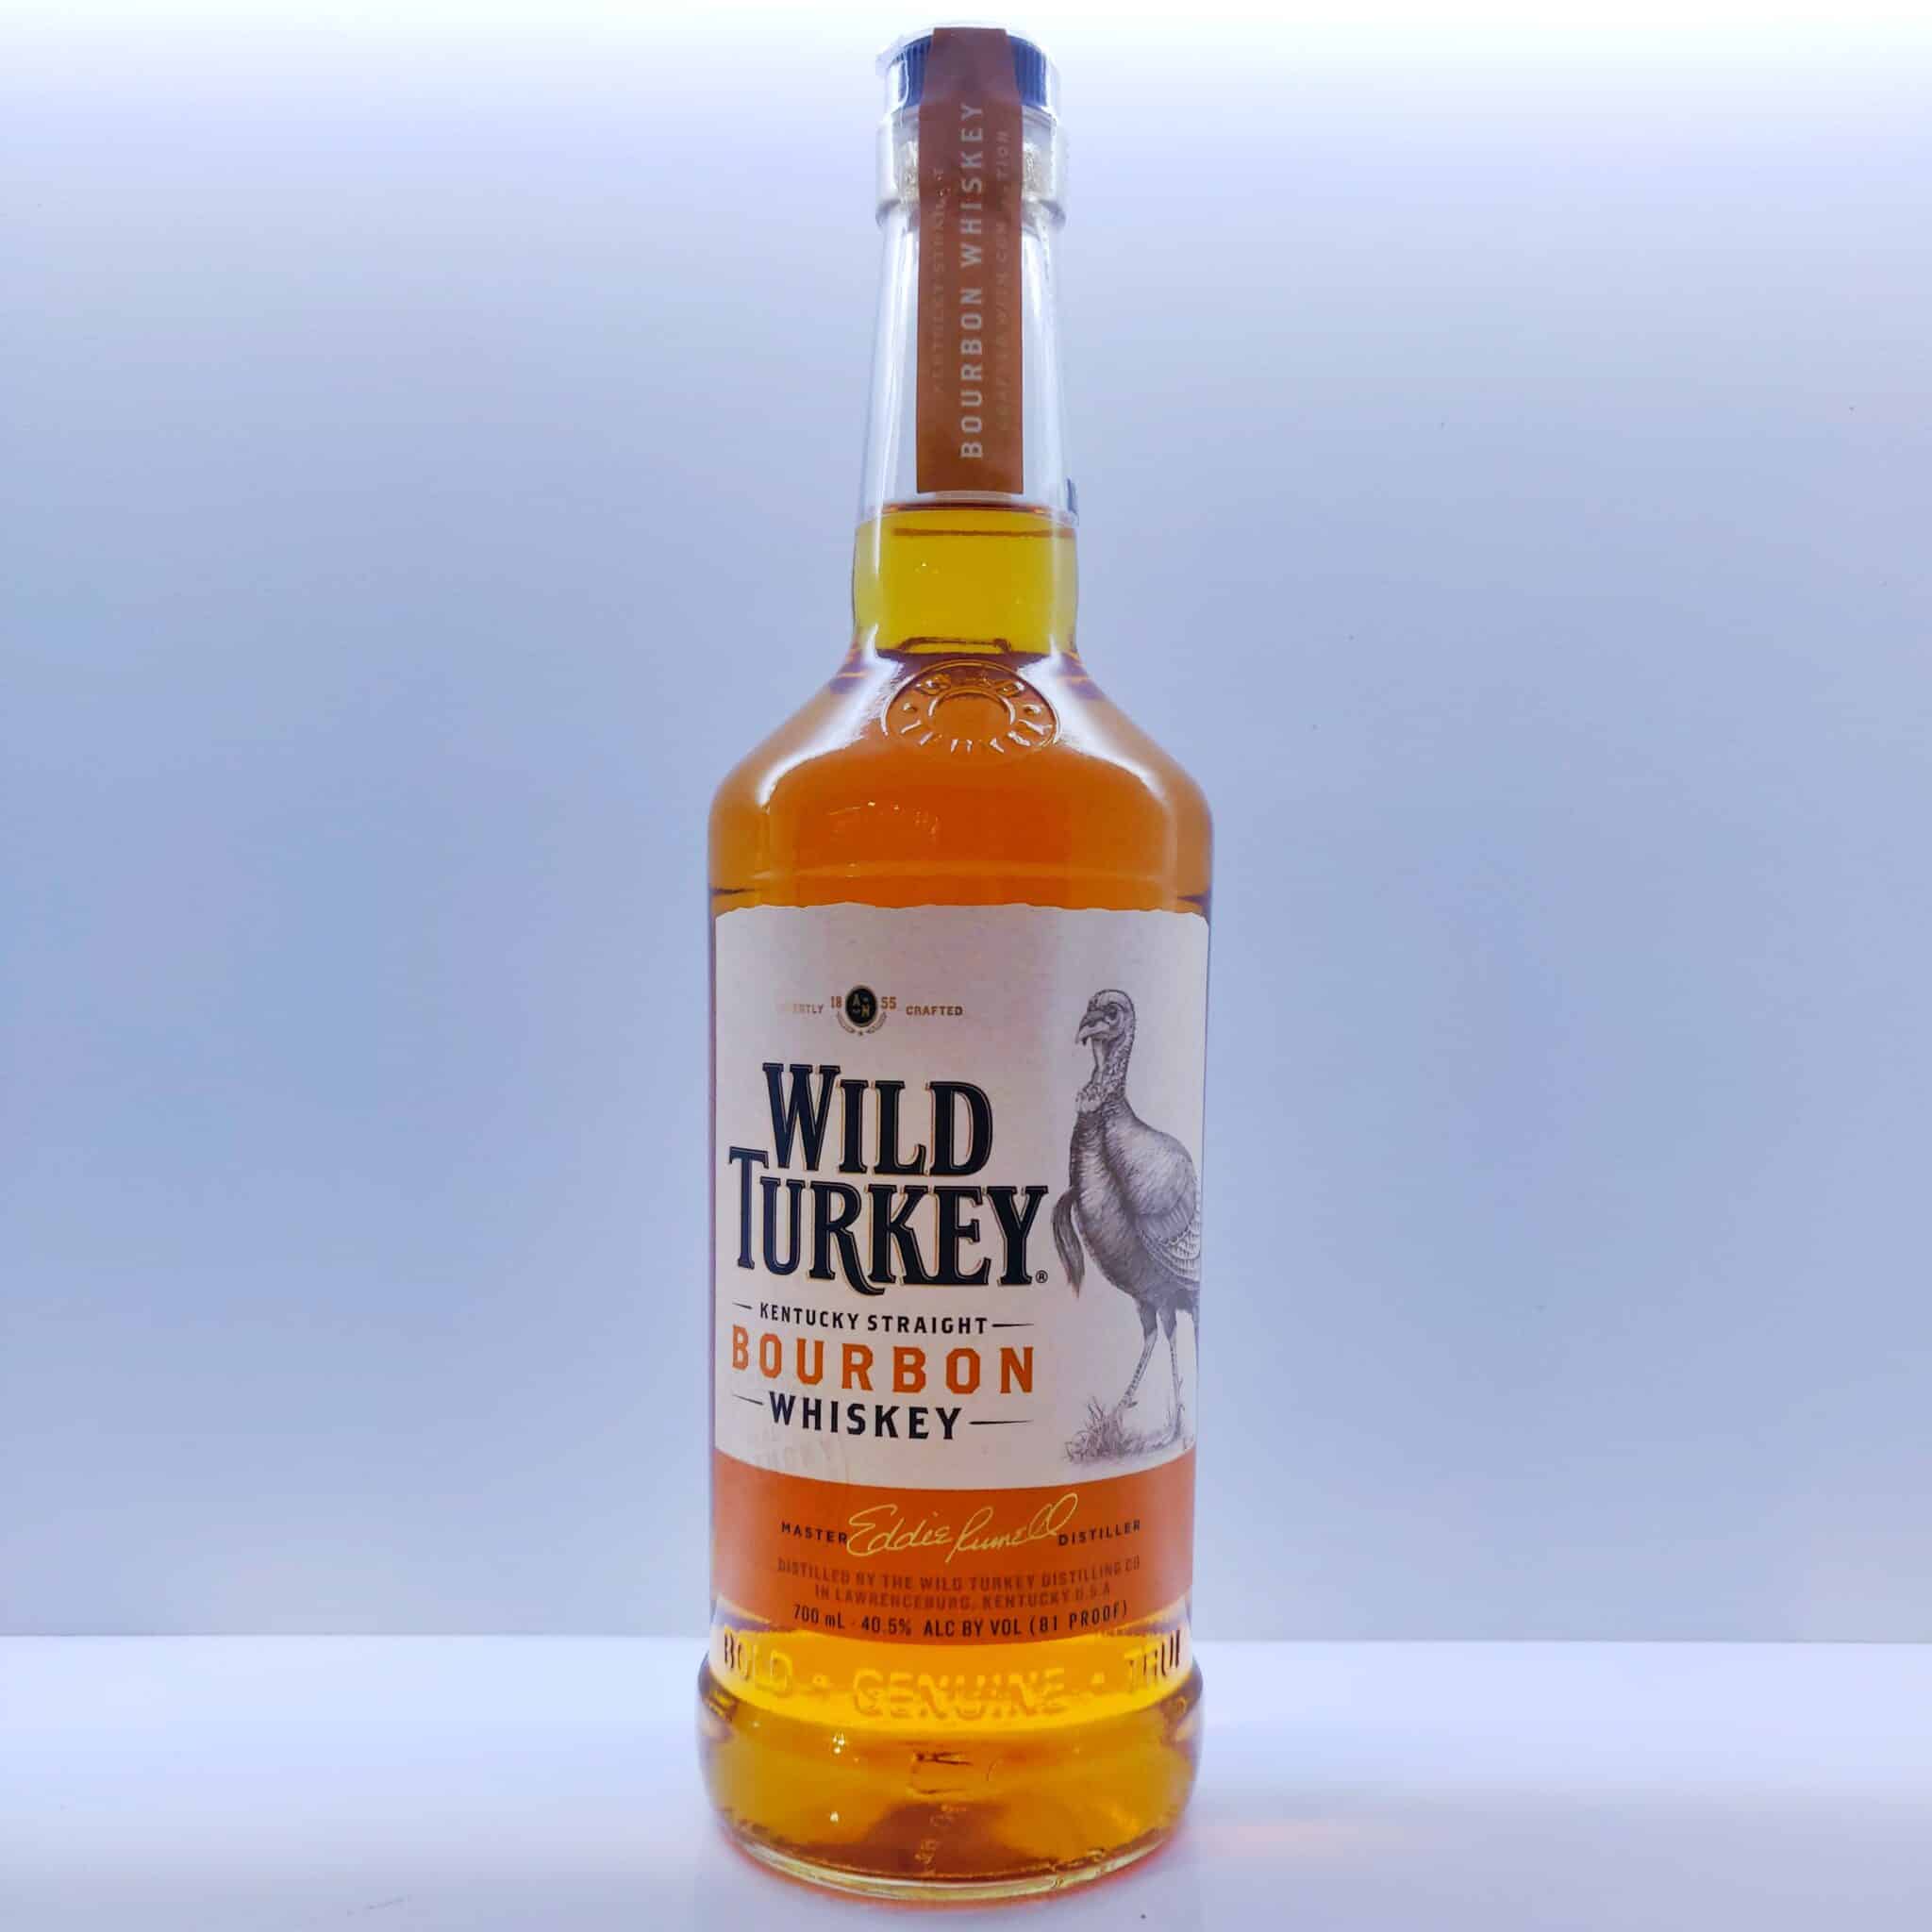 Wild Turkey Bourbon 81 Proof